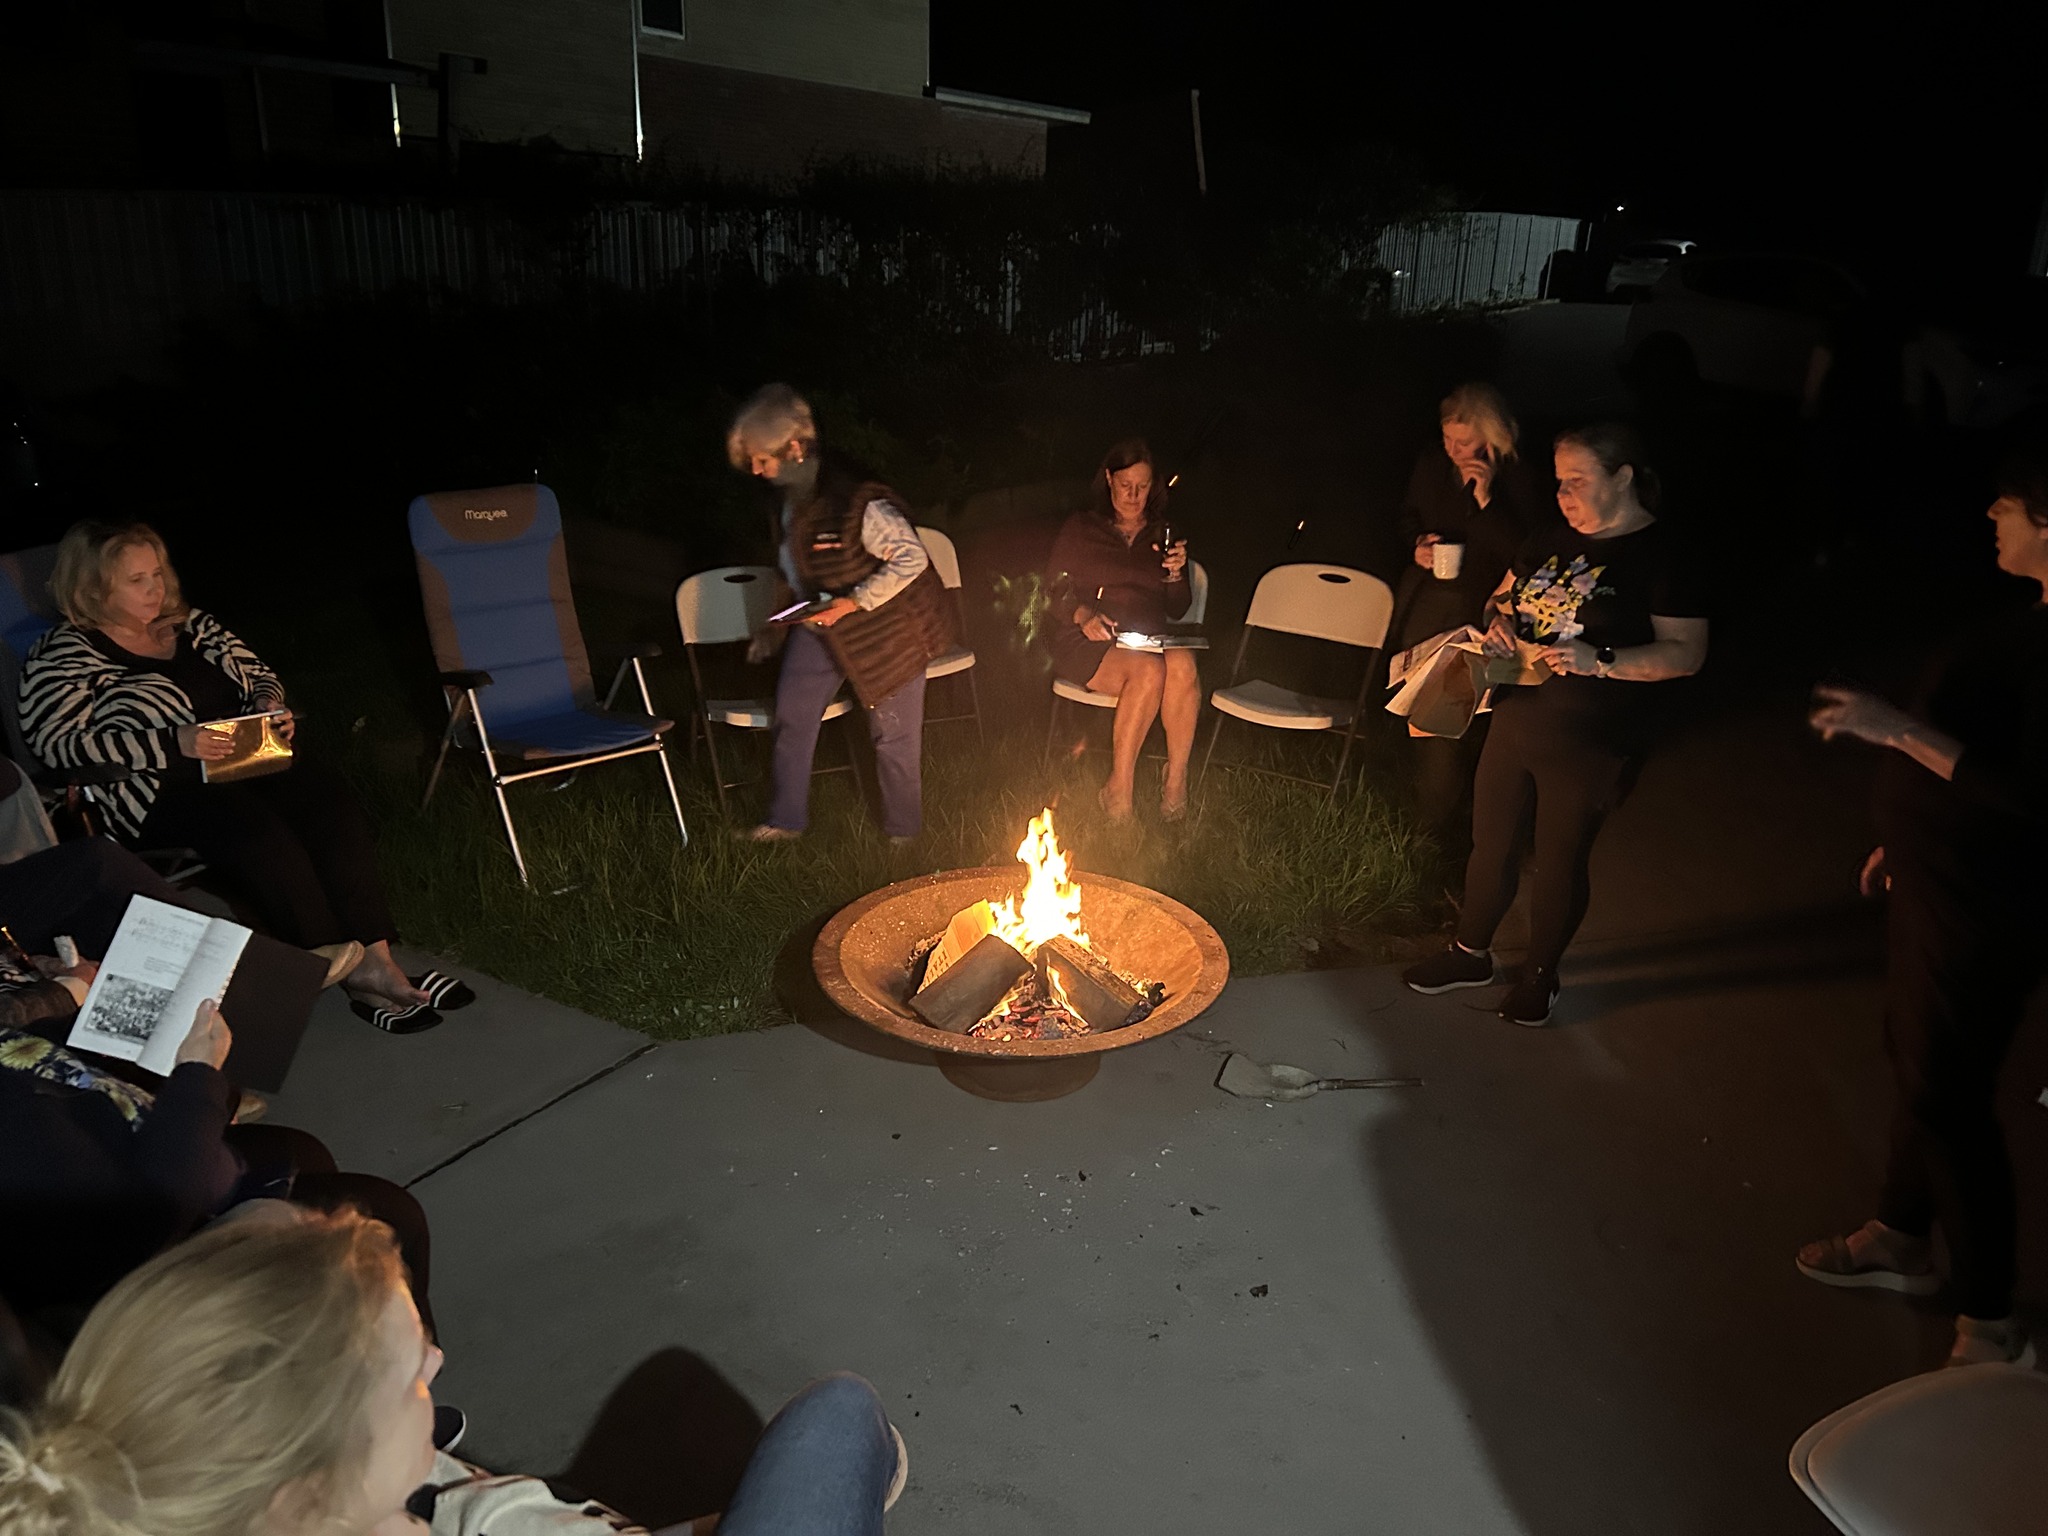 Singing around the campfire